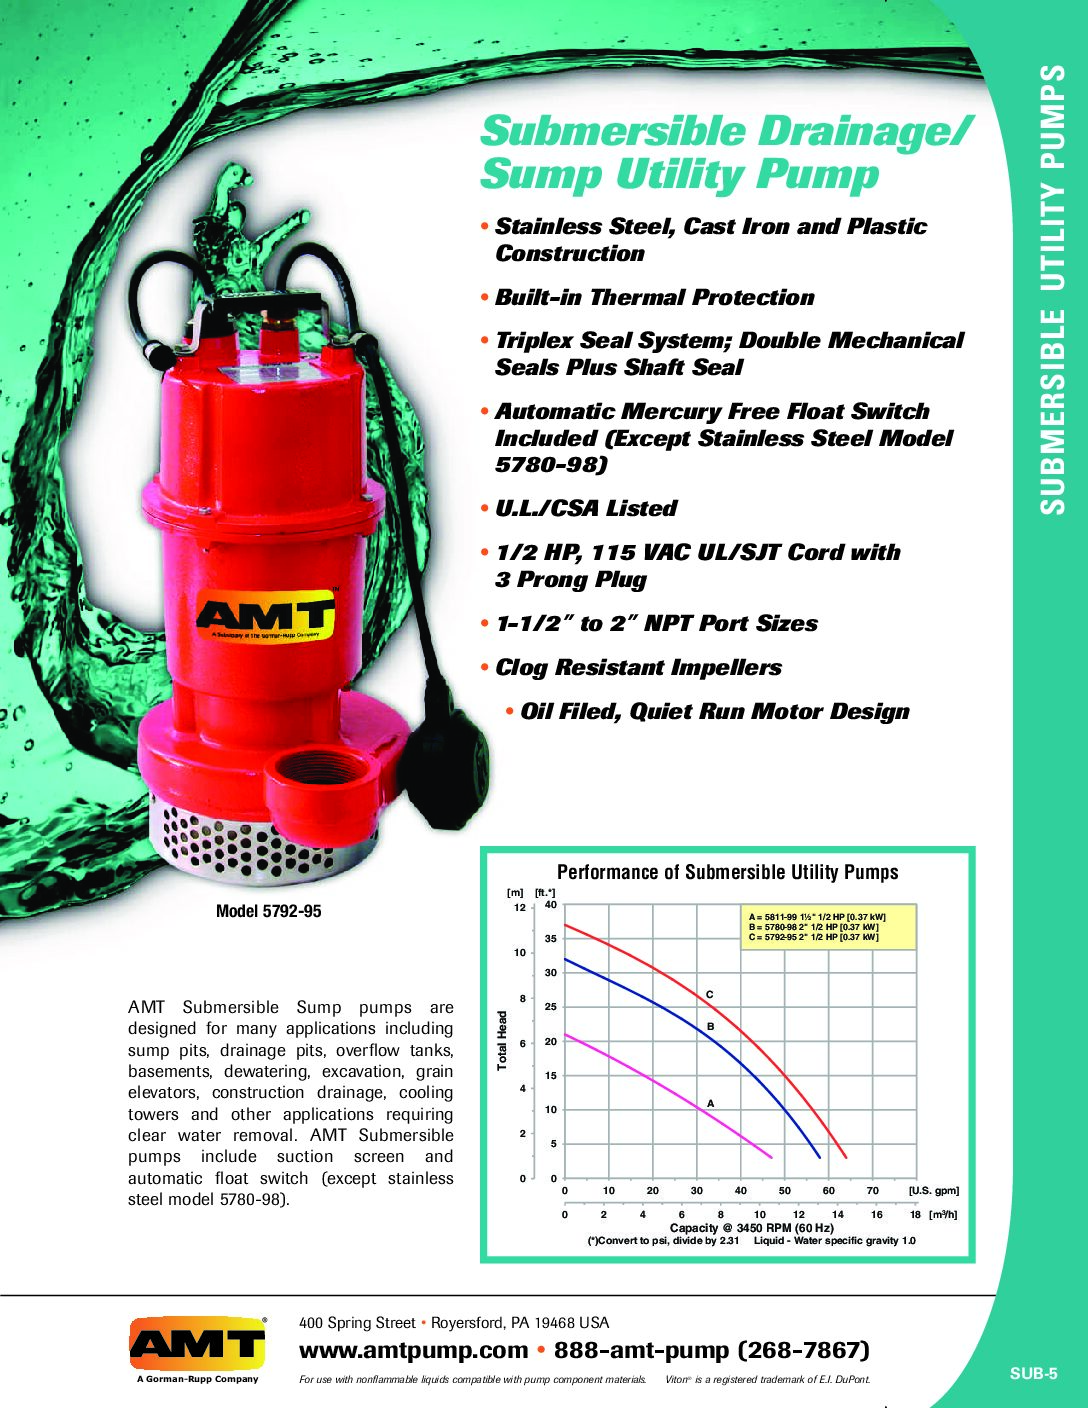 AMT Submersible Drainage Sump Utility Pumps